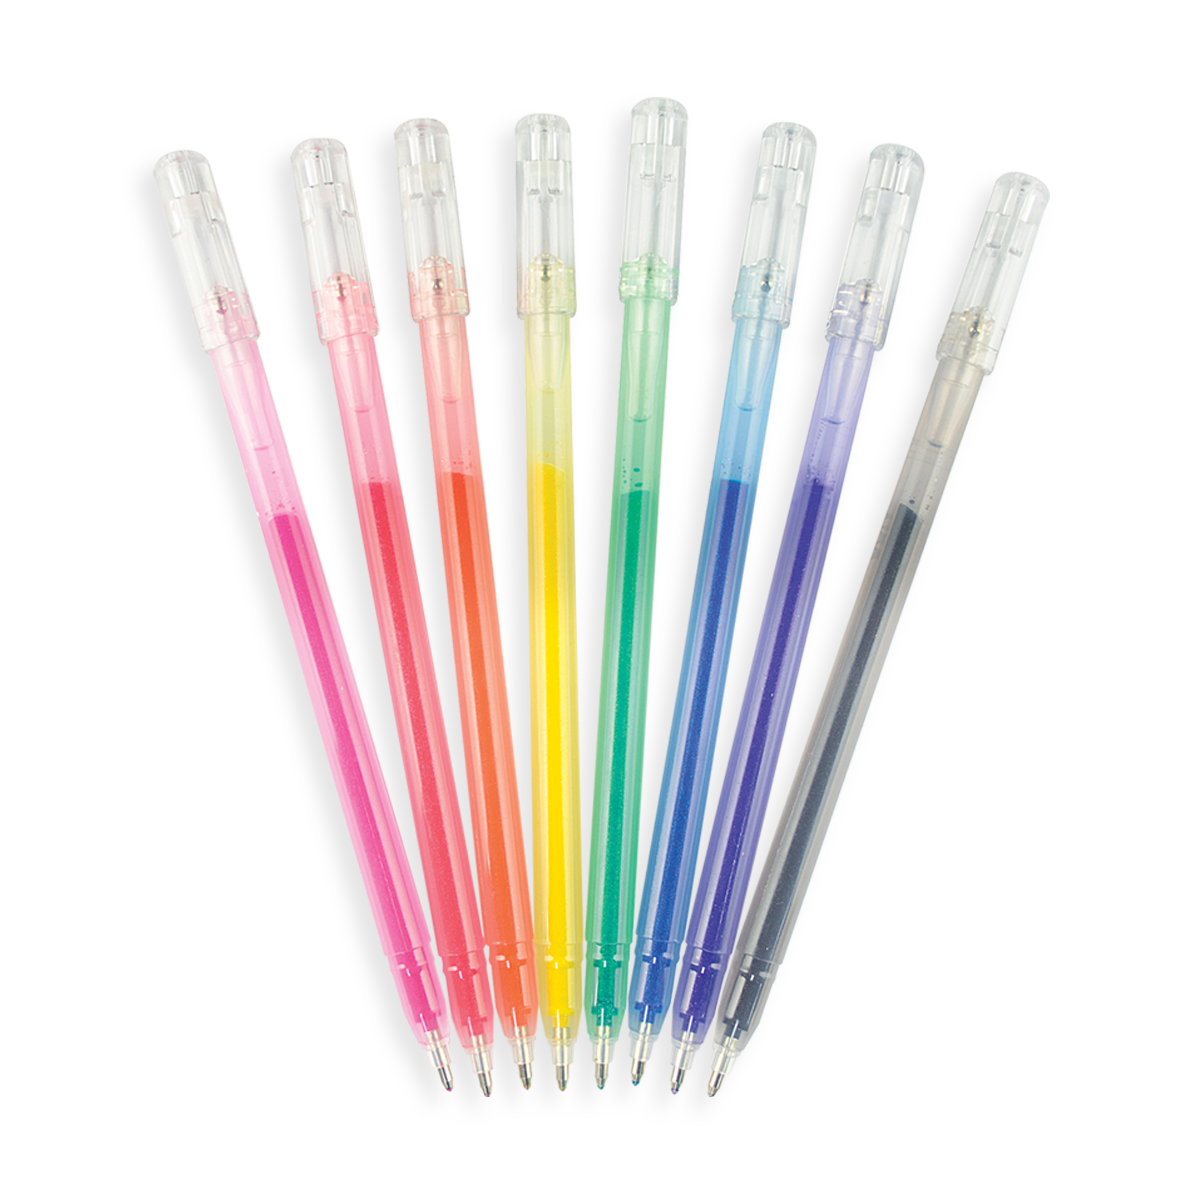 6 Glitter Color Gel Pen w/ Cushion Grip - Mazer Wholesale, Inc.